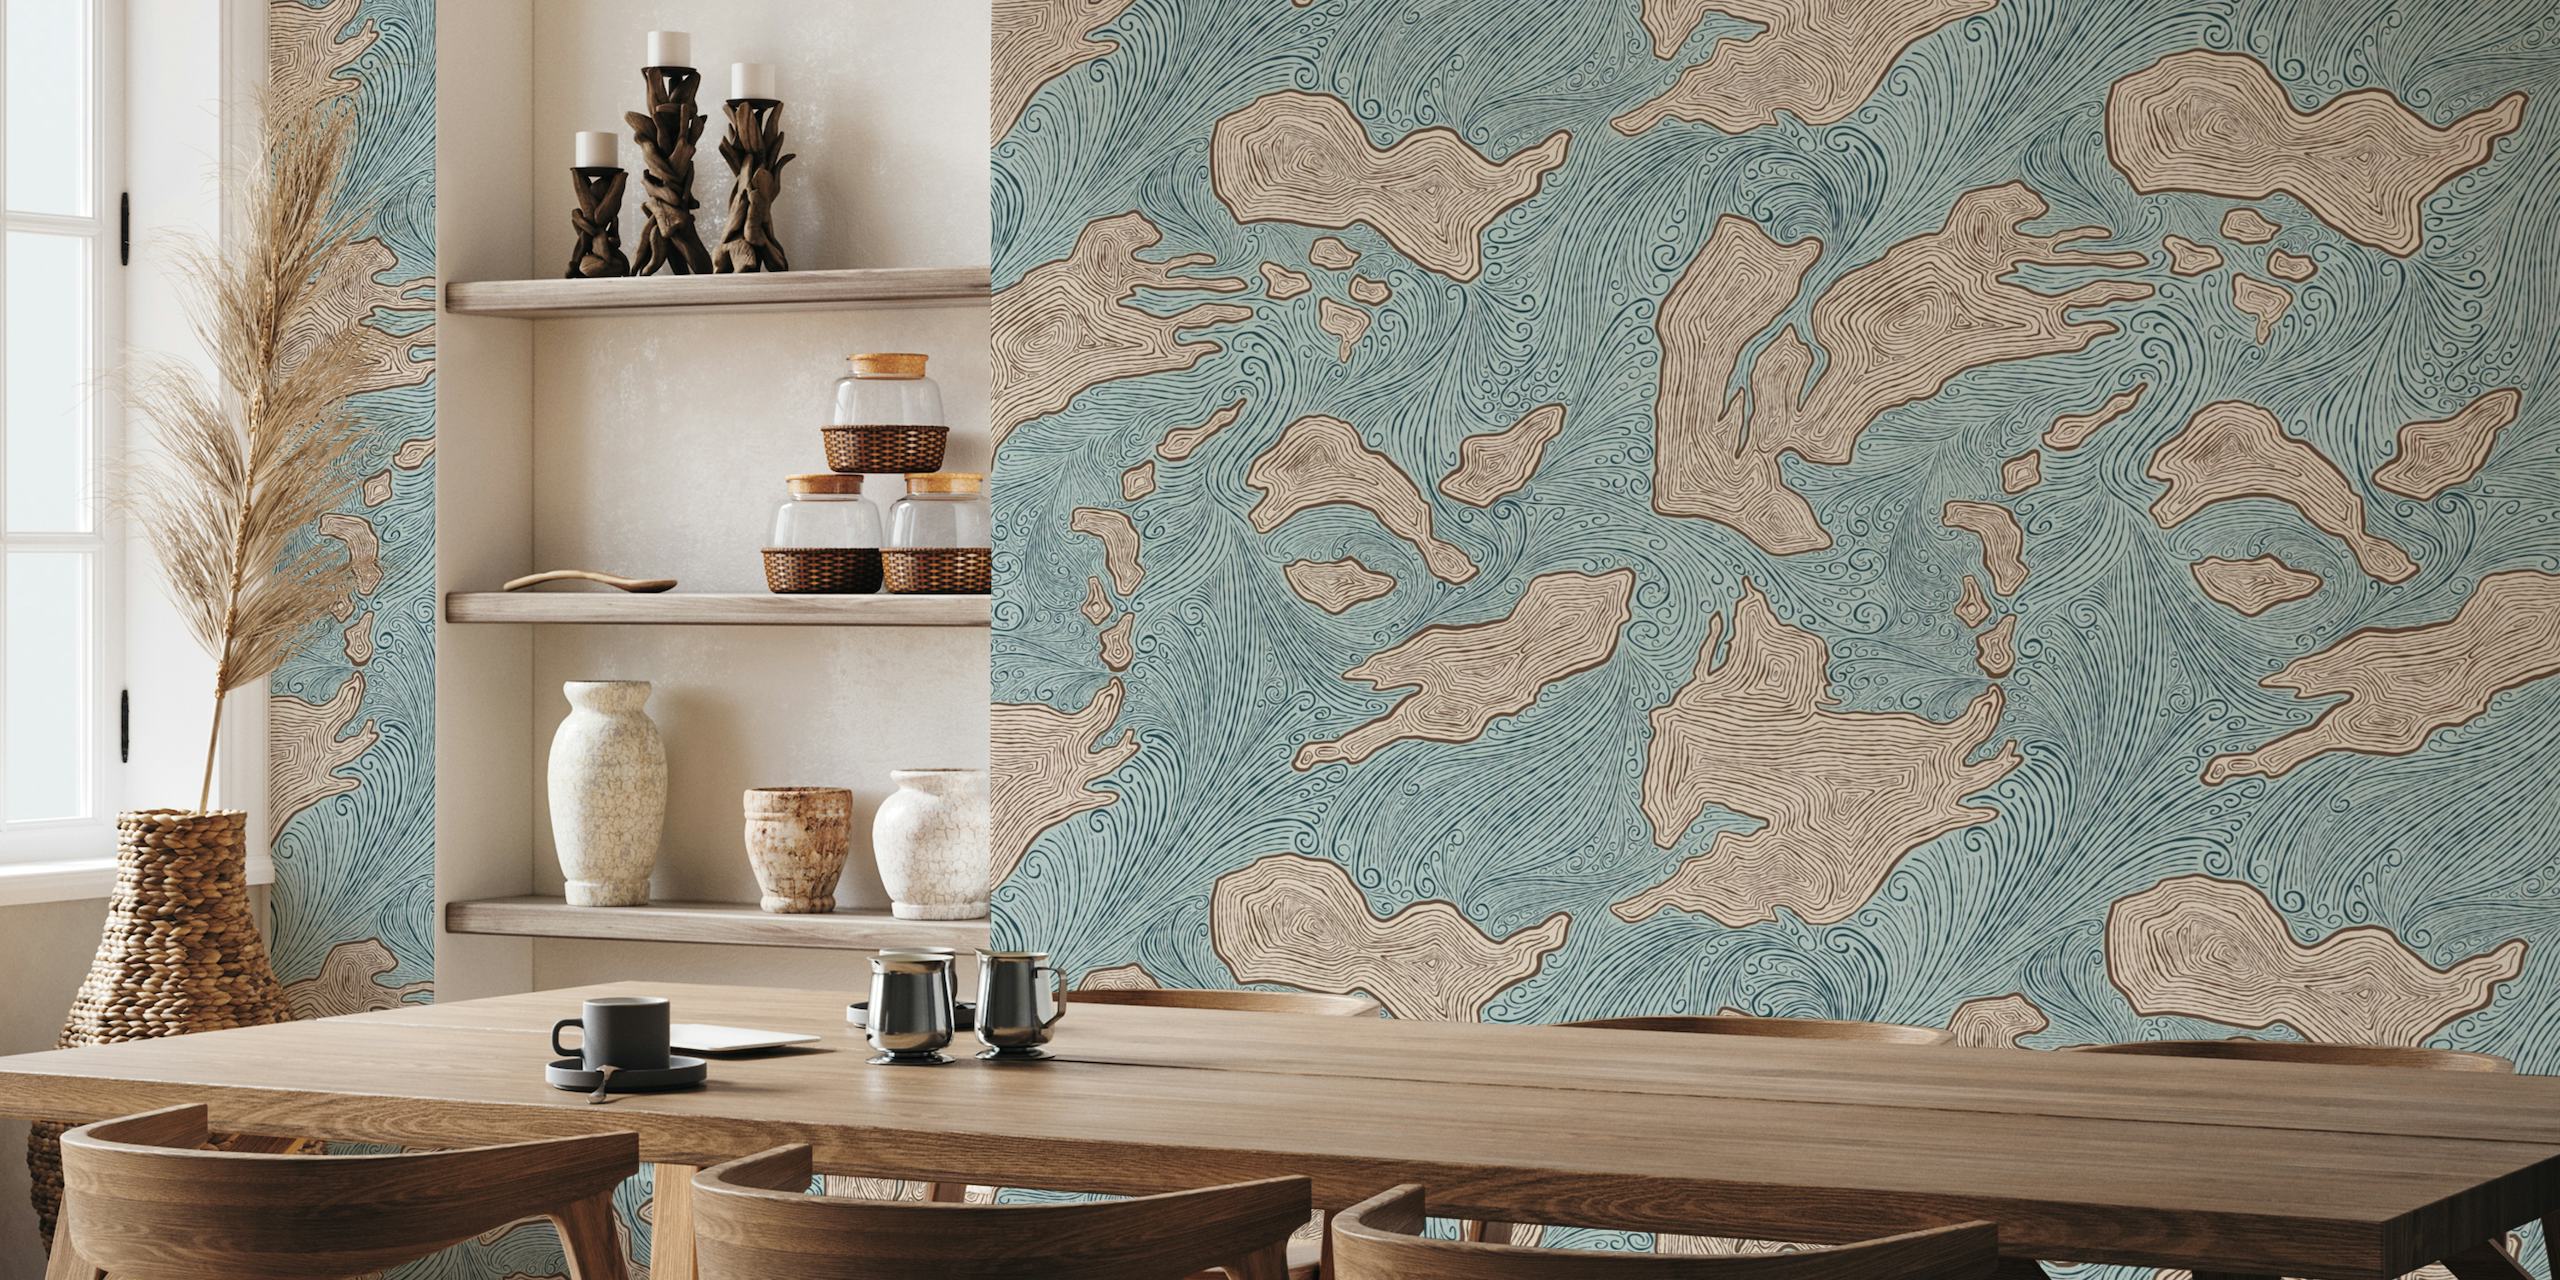 Fototapeta s abstraktními tvary ostrova v uklidňujících modrých a zemitých tónech s názvem „Neobjevené ostrovy“.